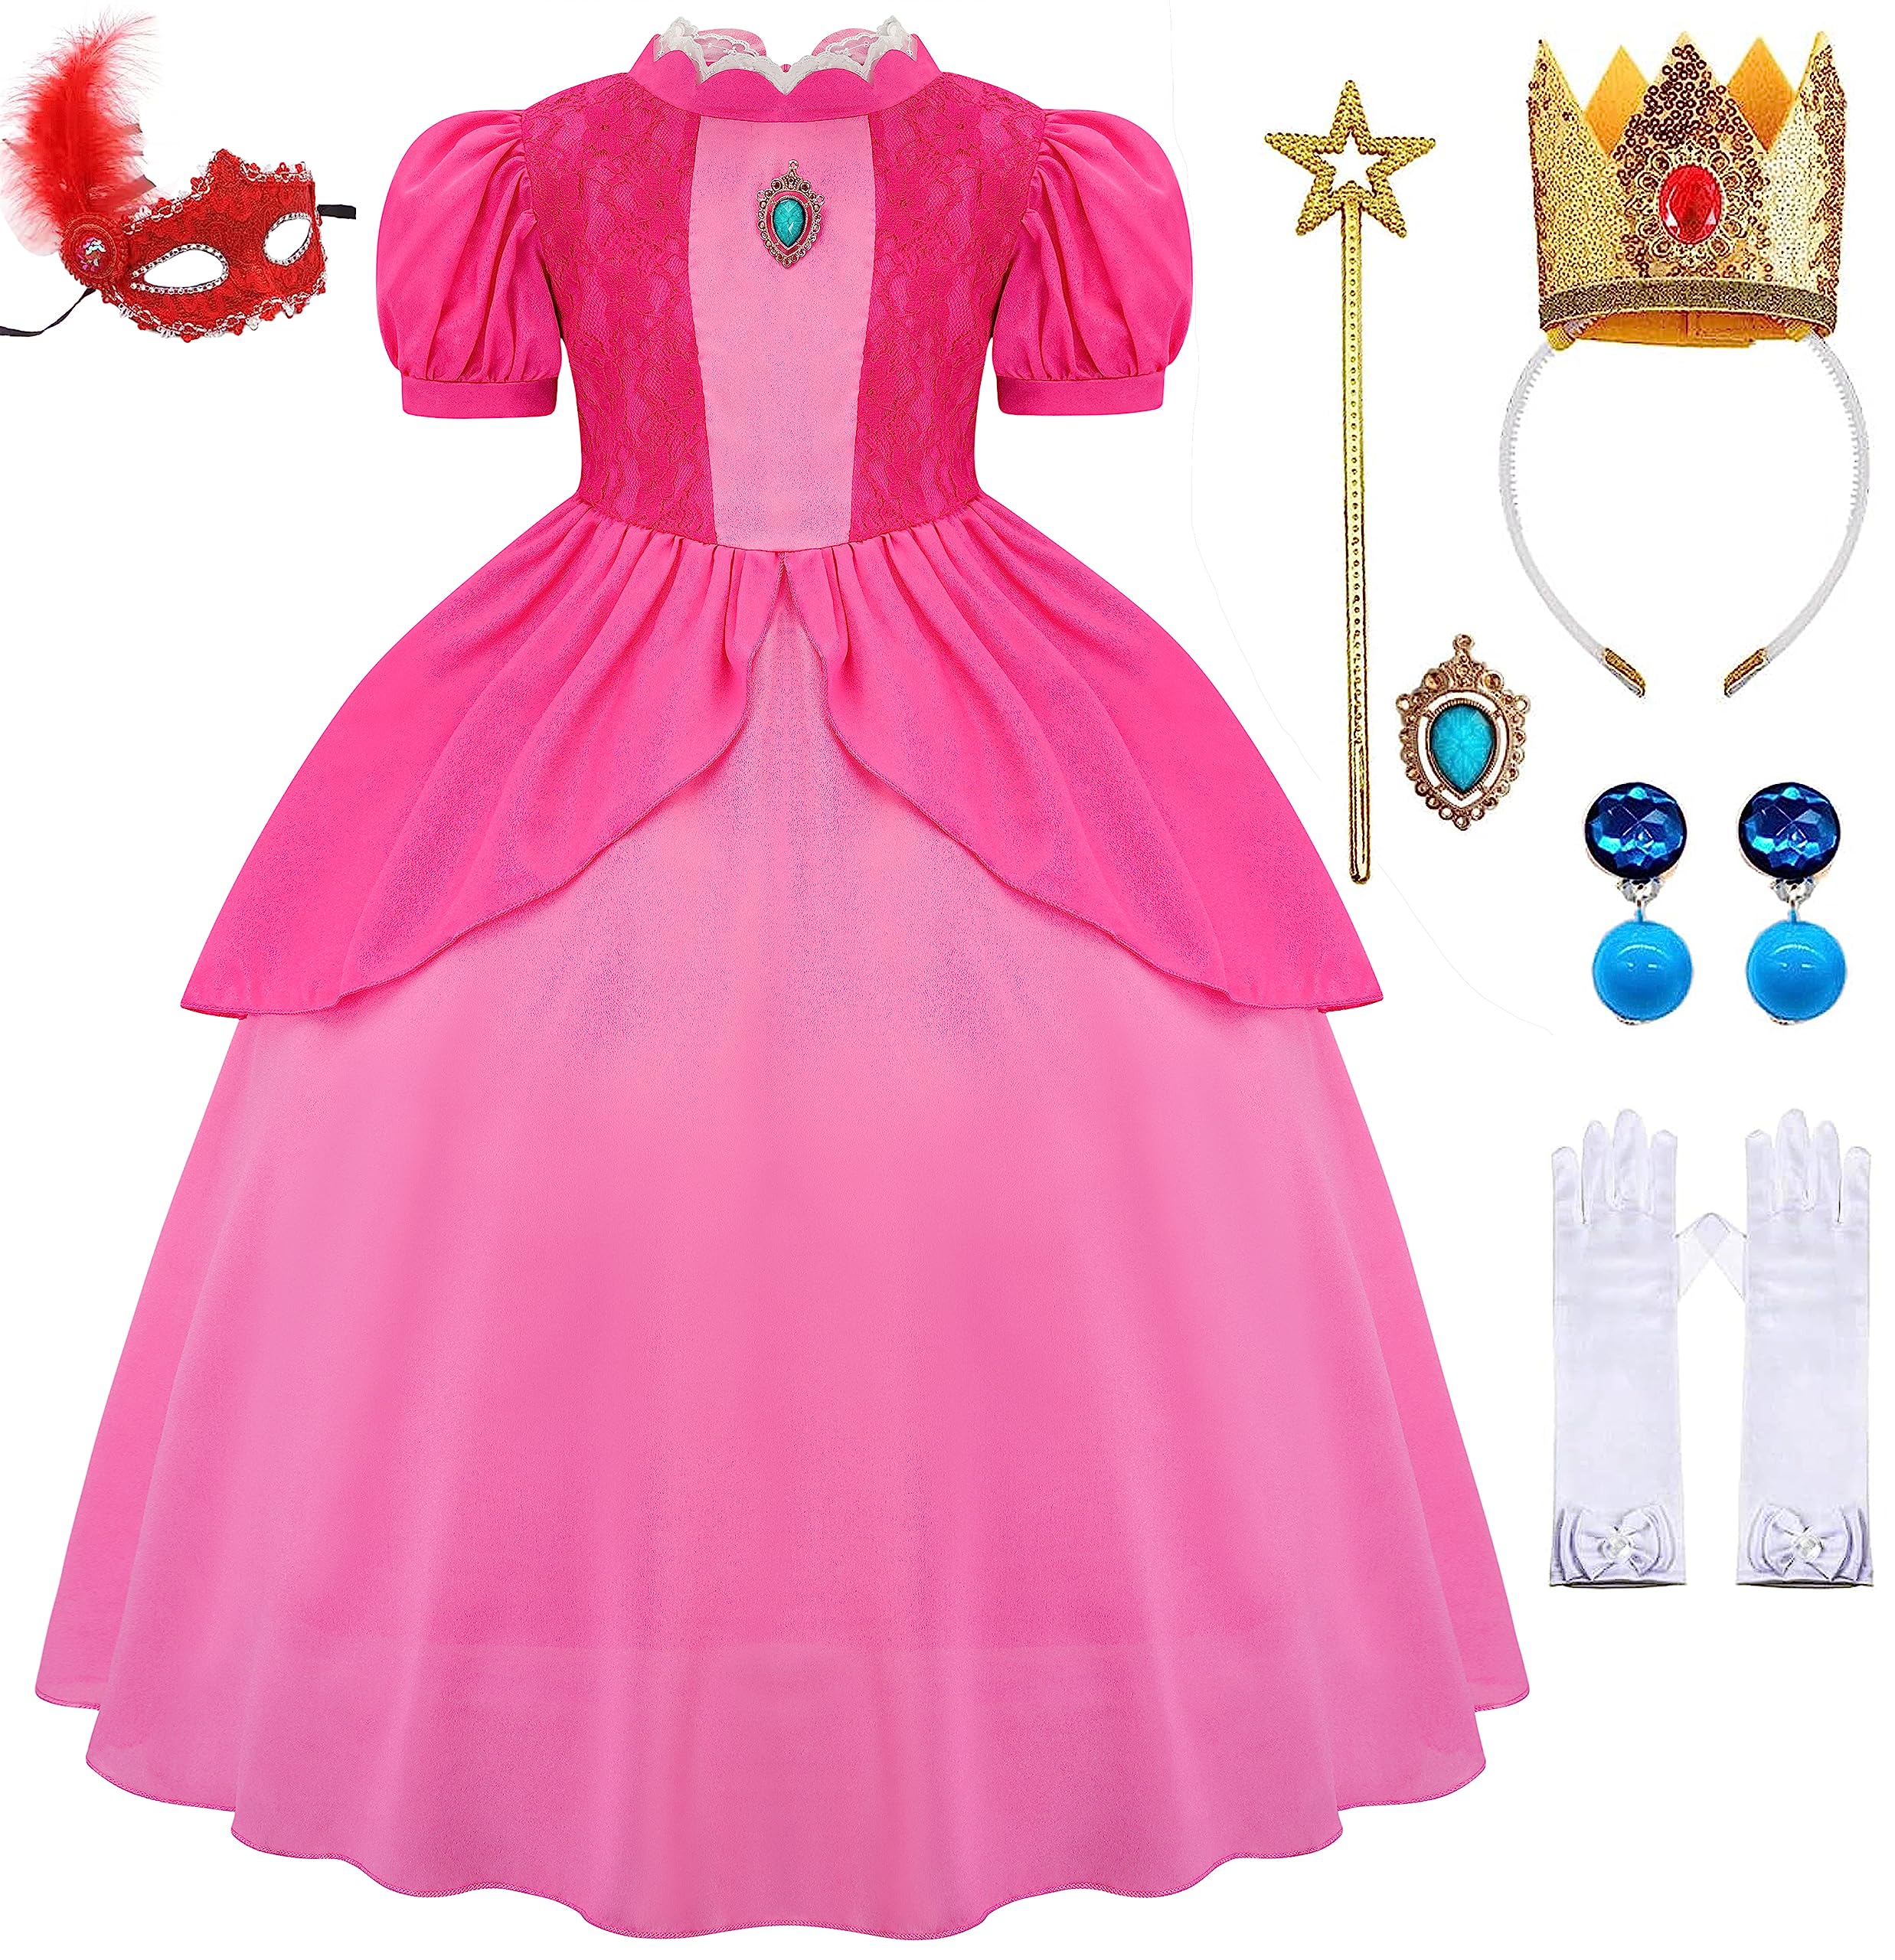 GZ-LAOPAITOU Princess Peach Costume for Girls Princess Peach Dress Birthday Dress Up Cosplay 3-12Years - image 1 of 5